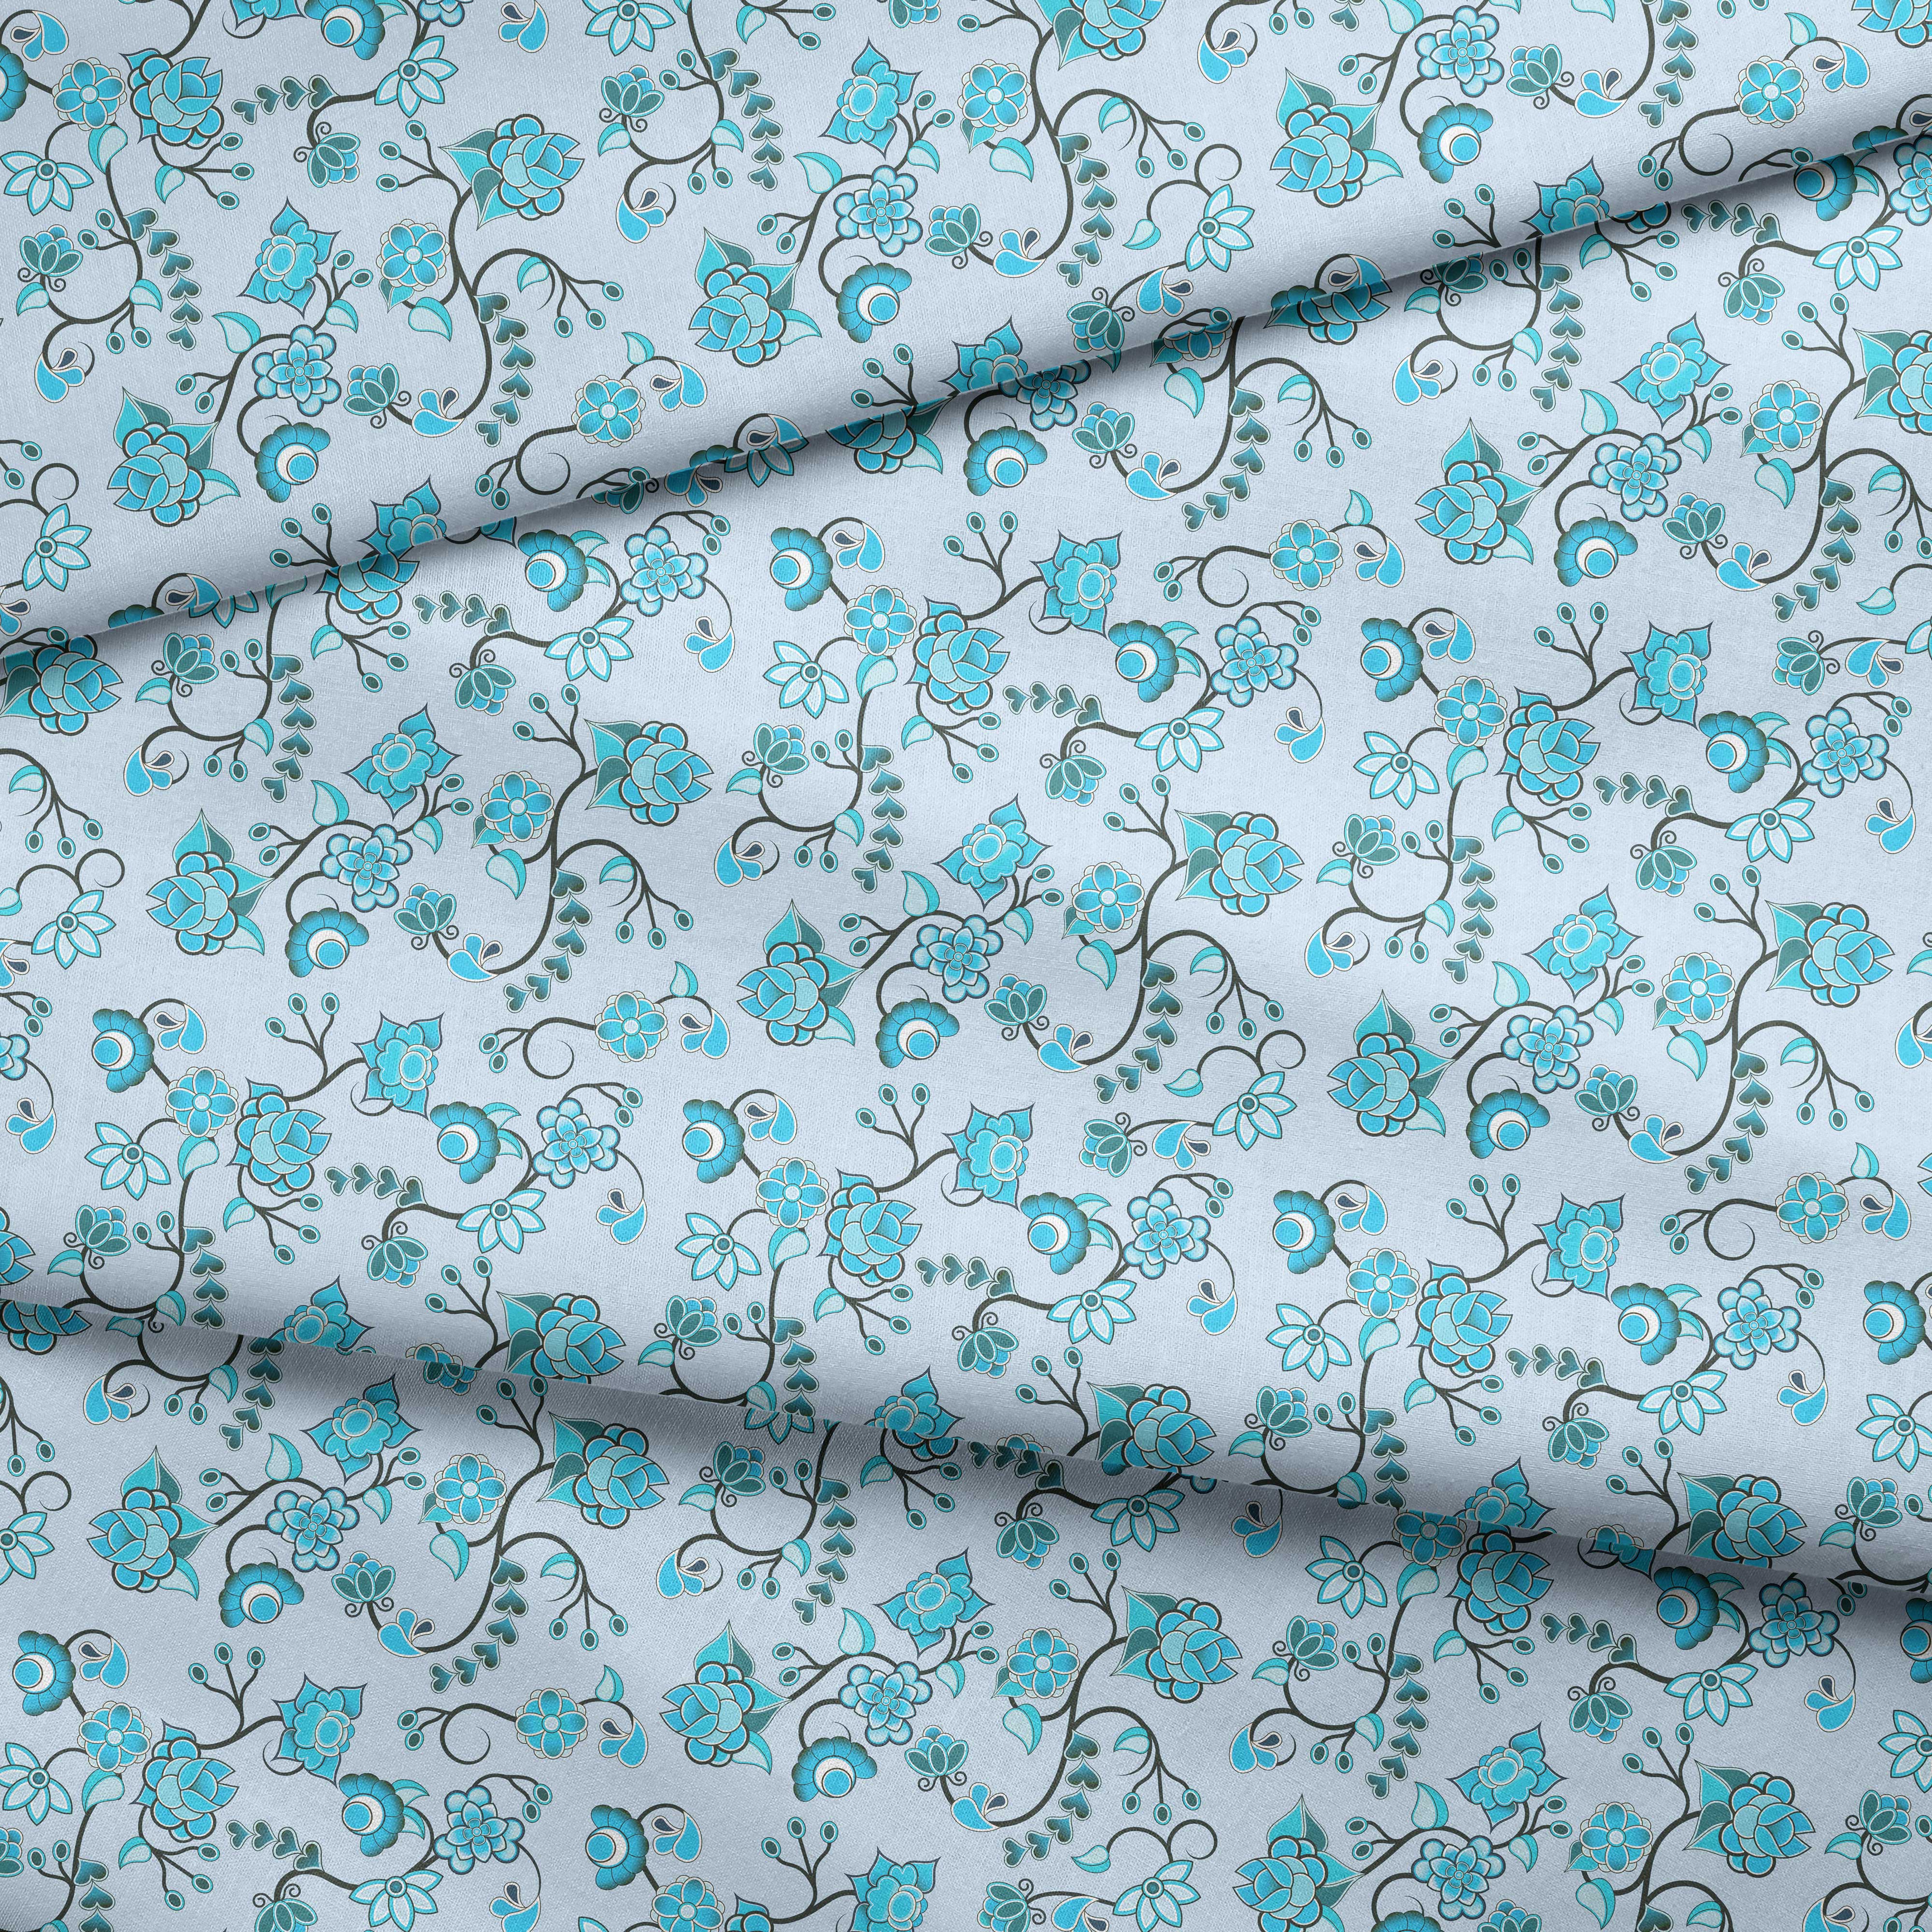 Blue Floral Amour Cotton Poplin Fabric By the Yard Fabric NBprintex 